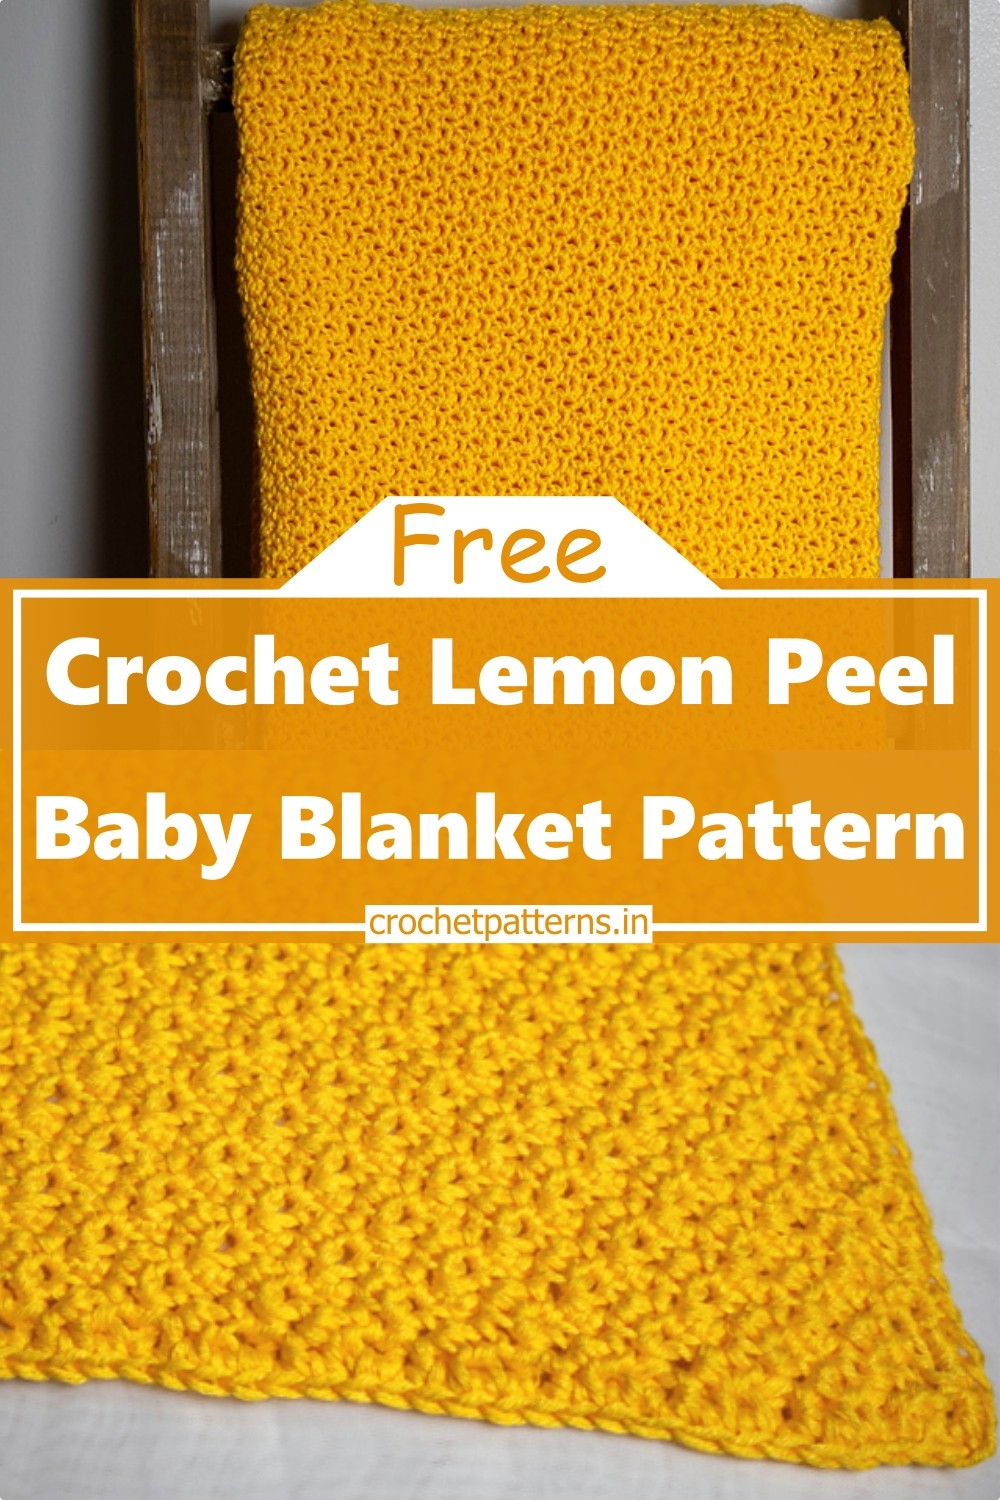 Crochet Lemon Peel Baby Blanket Pattern